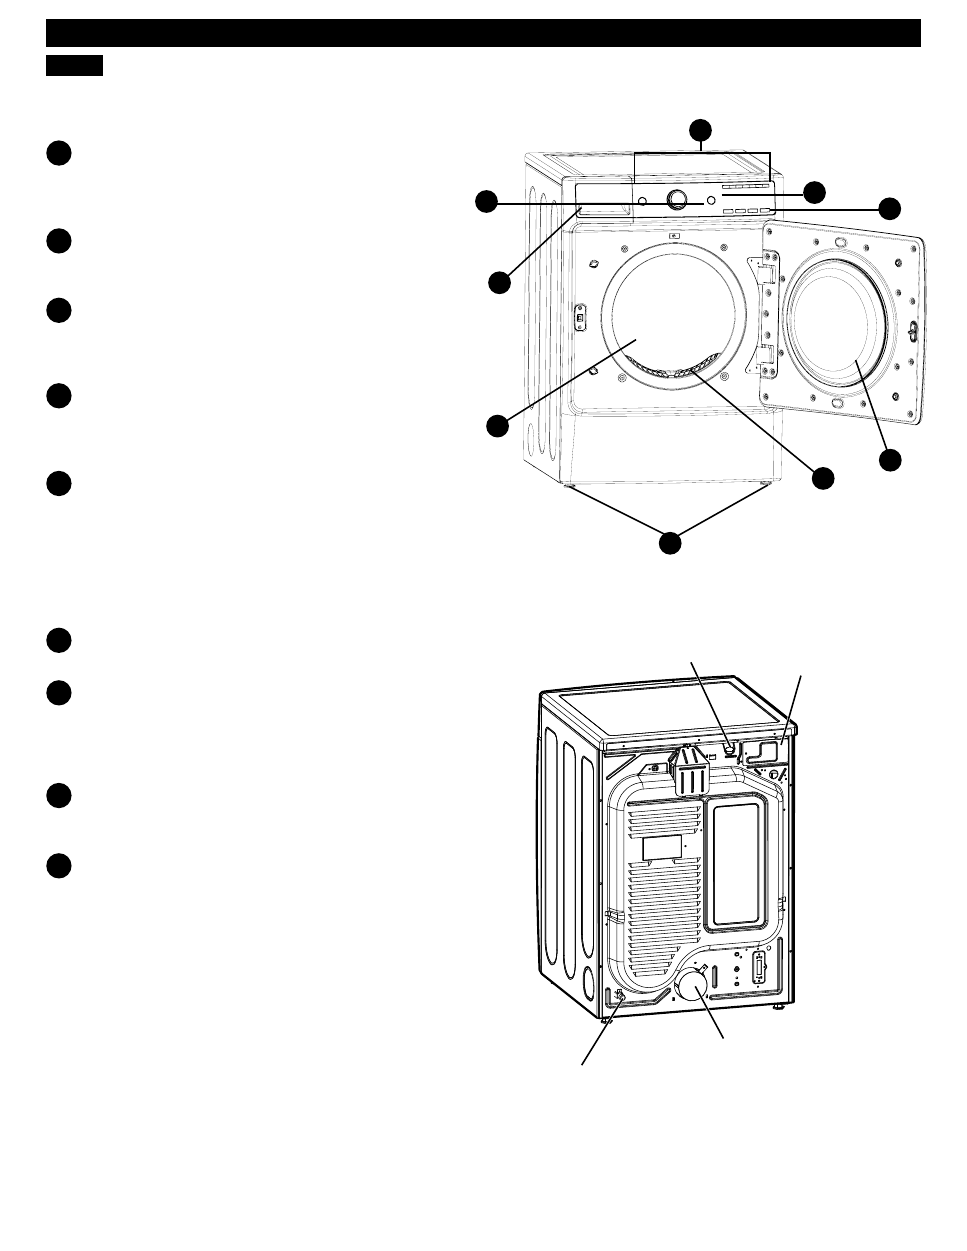 Kenmore 79522 Gas Dryer User Manual - wishrenew